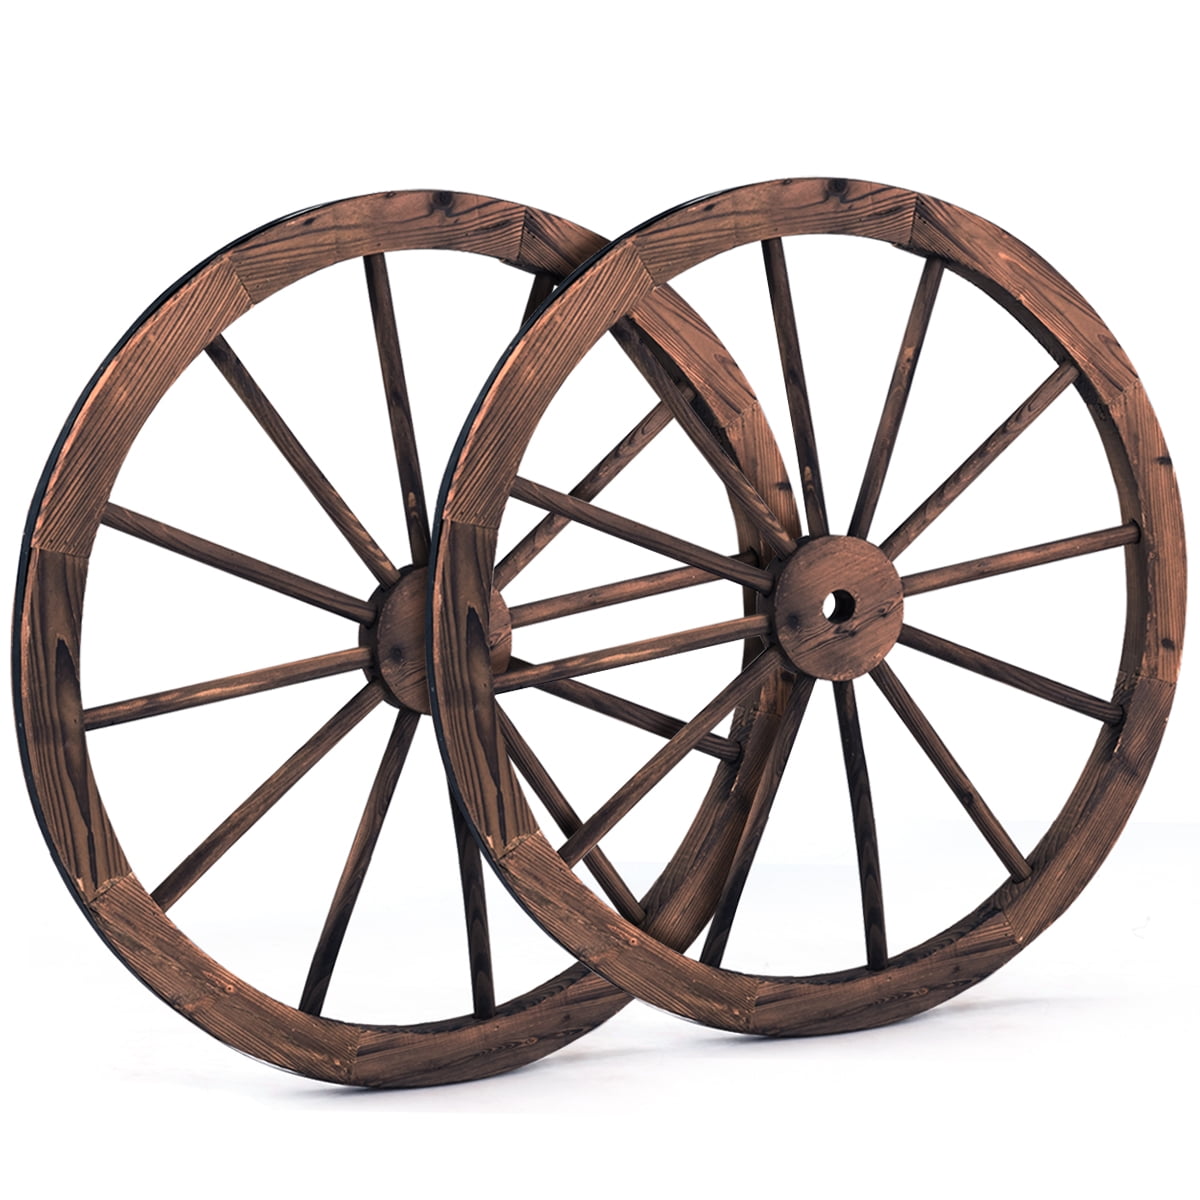 Steel Rim Wall Decor, Decorative Wooden Cart Wheels